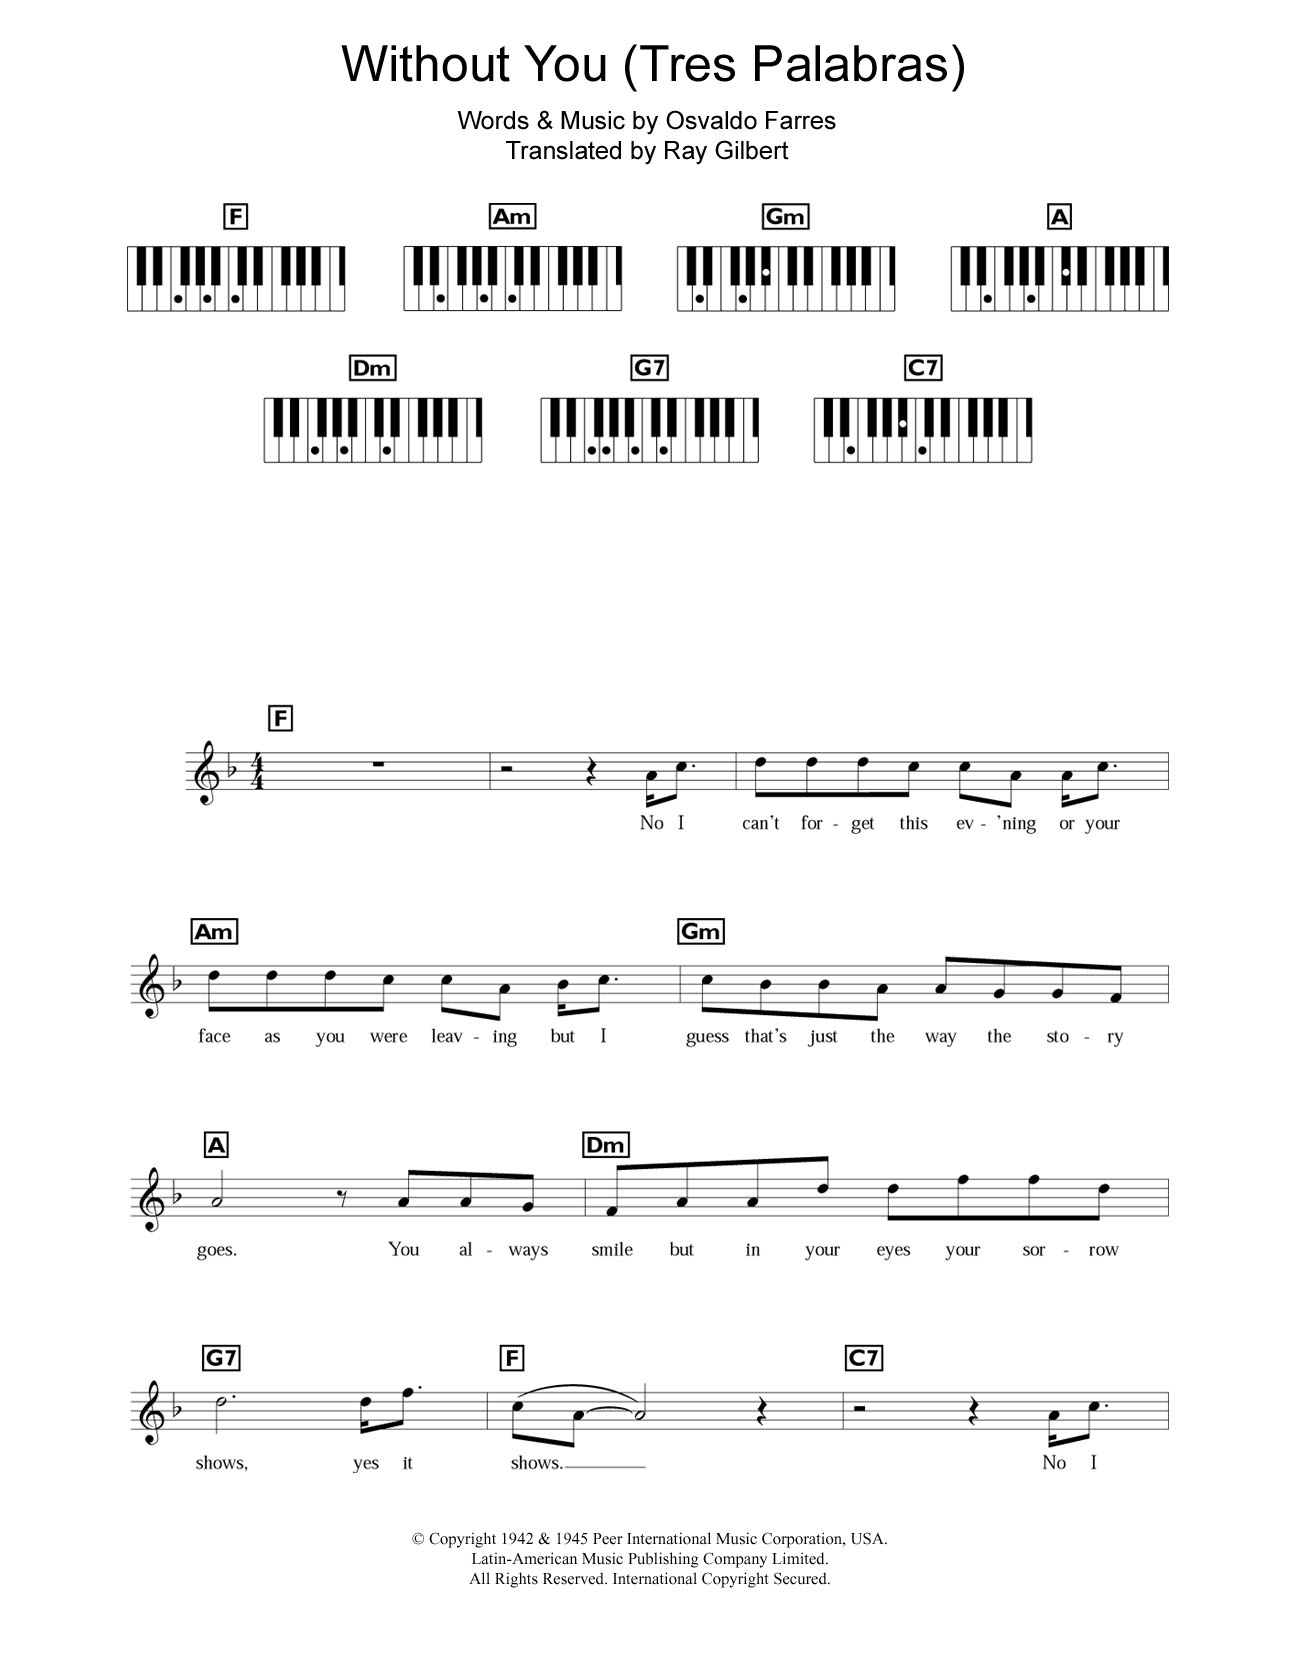 Mariah Carey Without You (Tres Palabras) Sheet Music Notes & Chords for Keyboard - Download or Print PDF